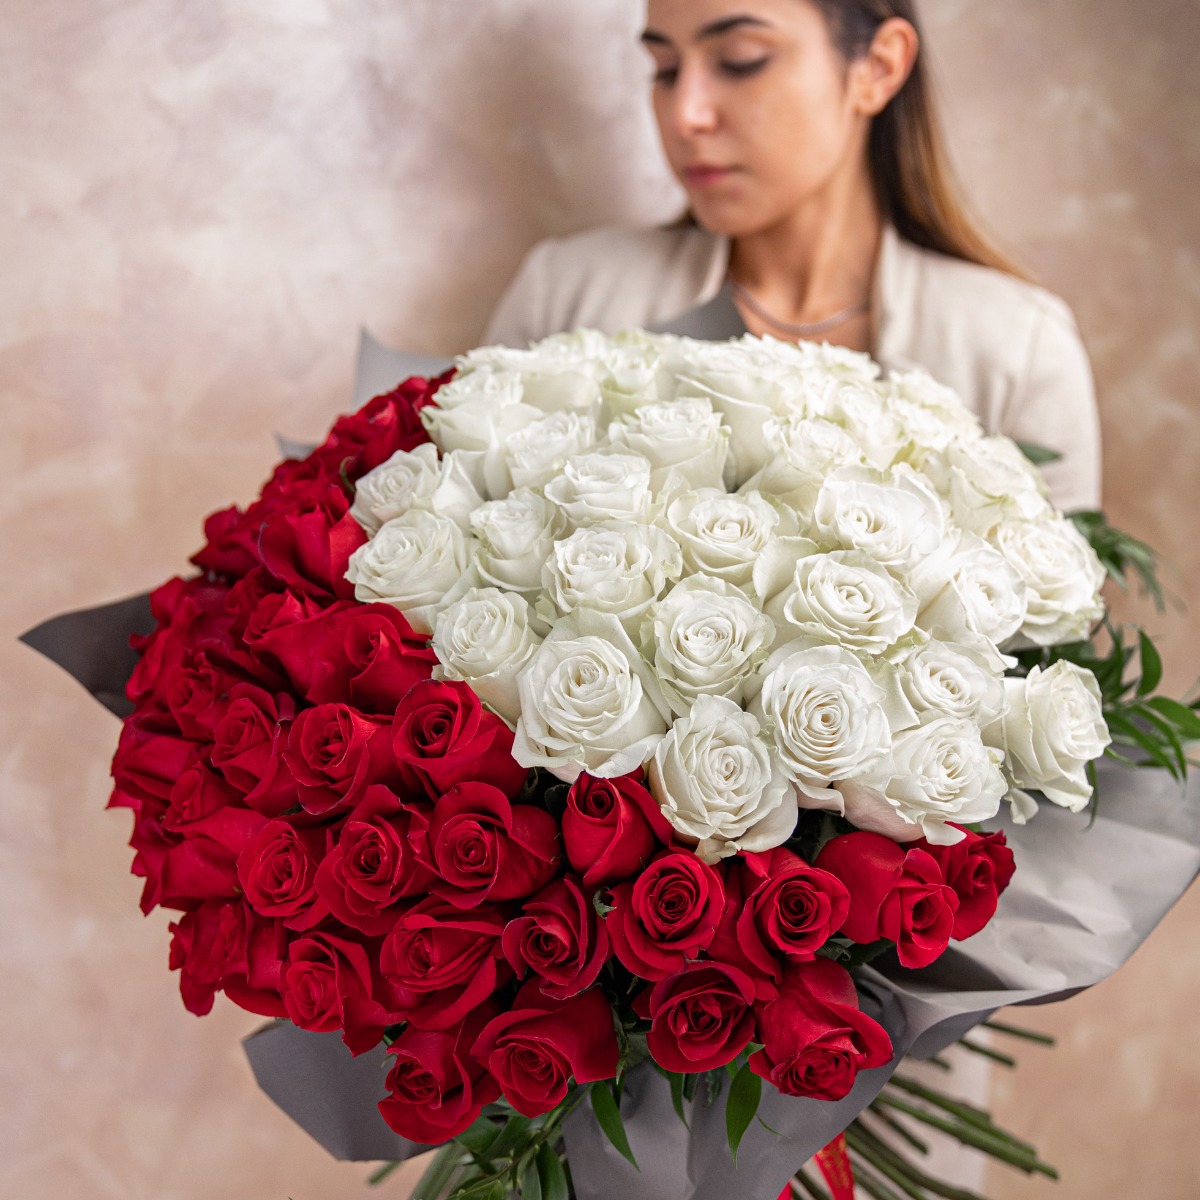 Buchet 101 trandafiri rosii si albi 